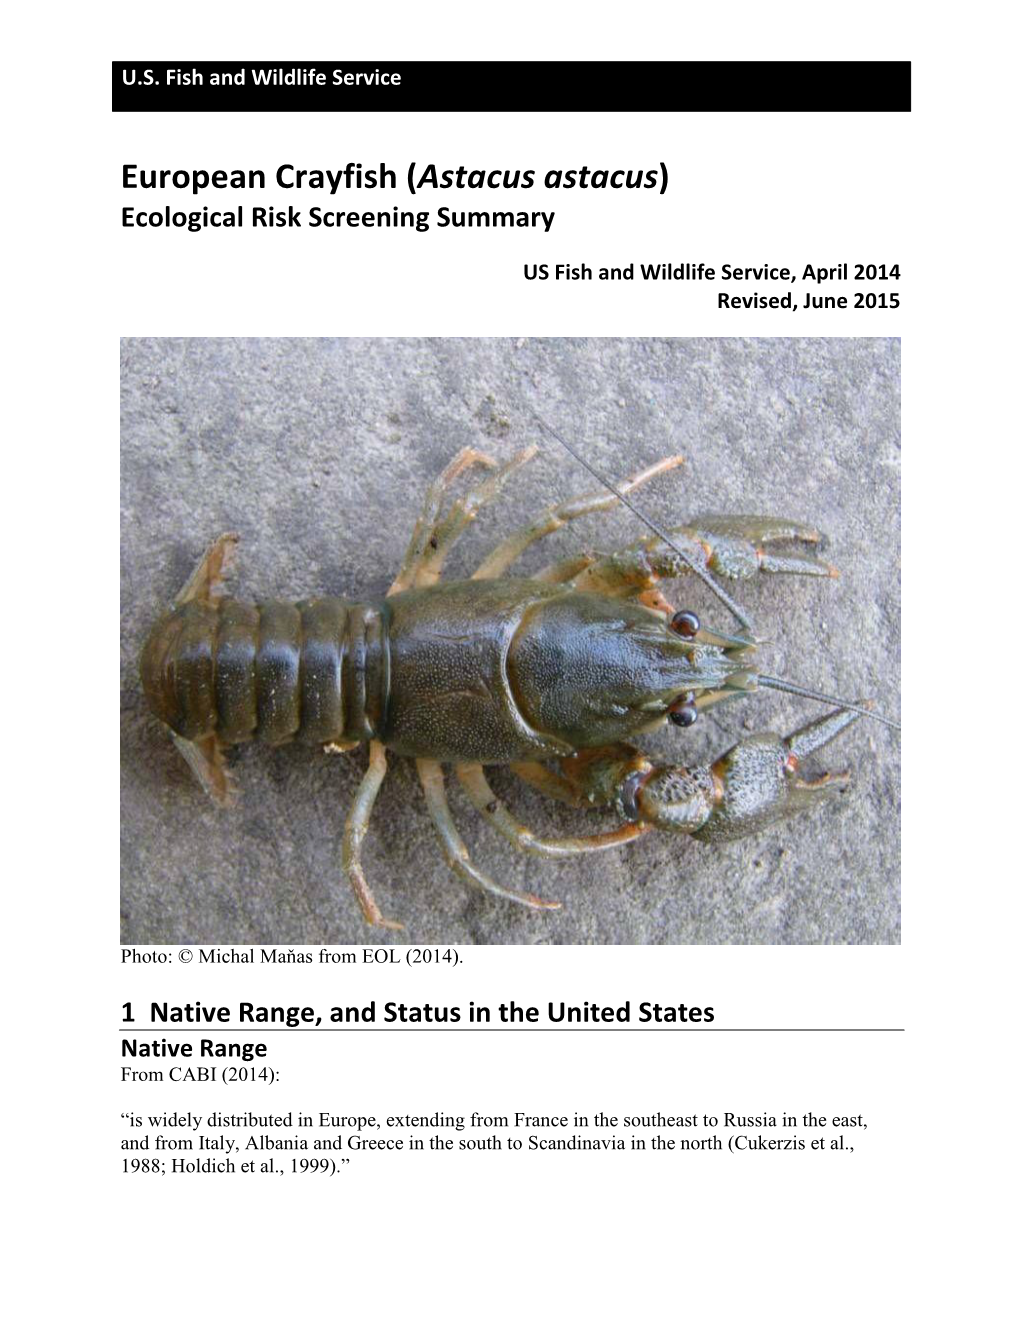 European Crayfish (Astacus Astacus) Ecological Risk Screening Summary